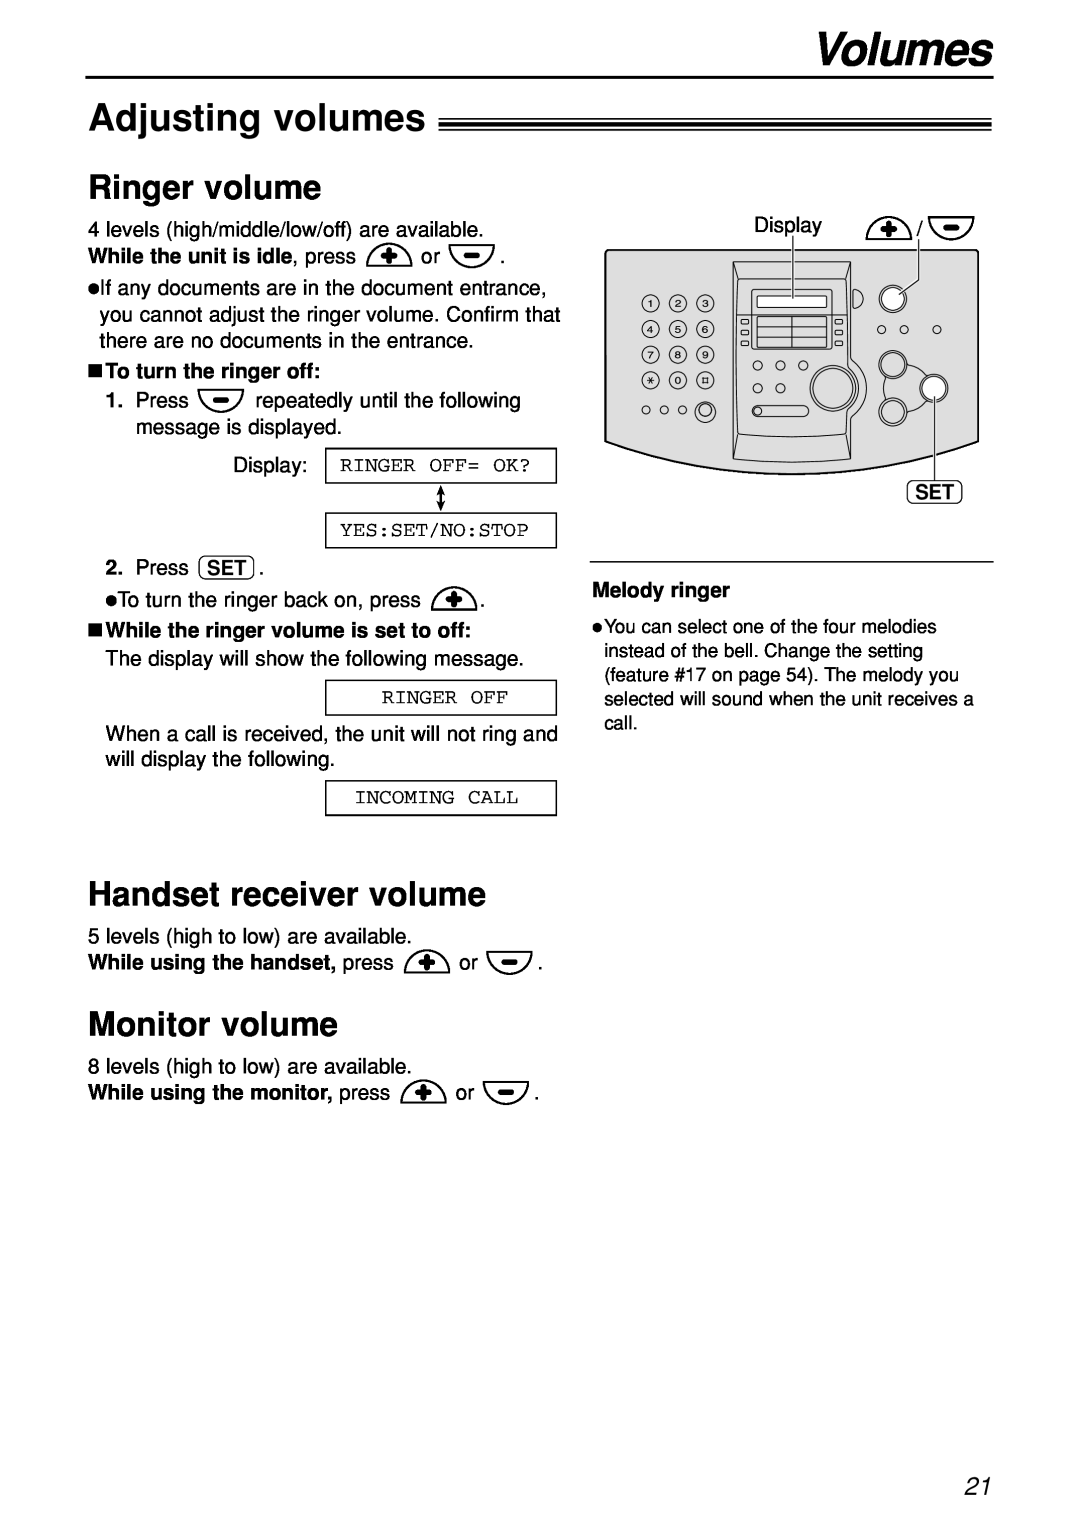 Panasonic KX-FL501C manual Volumes, Adjusting volumes, Ringer volume, Handset receiver volume, Monitor volume 